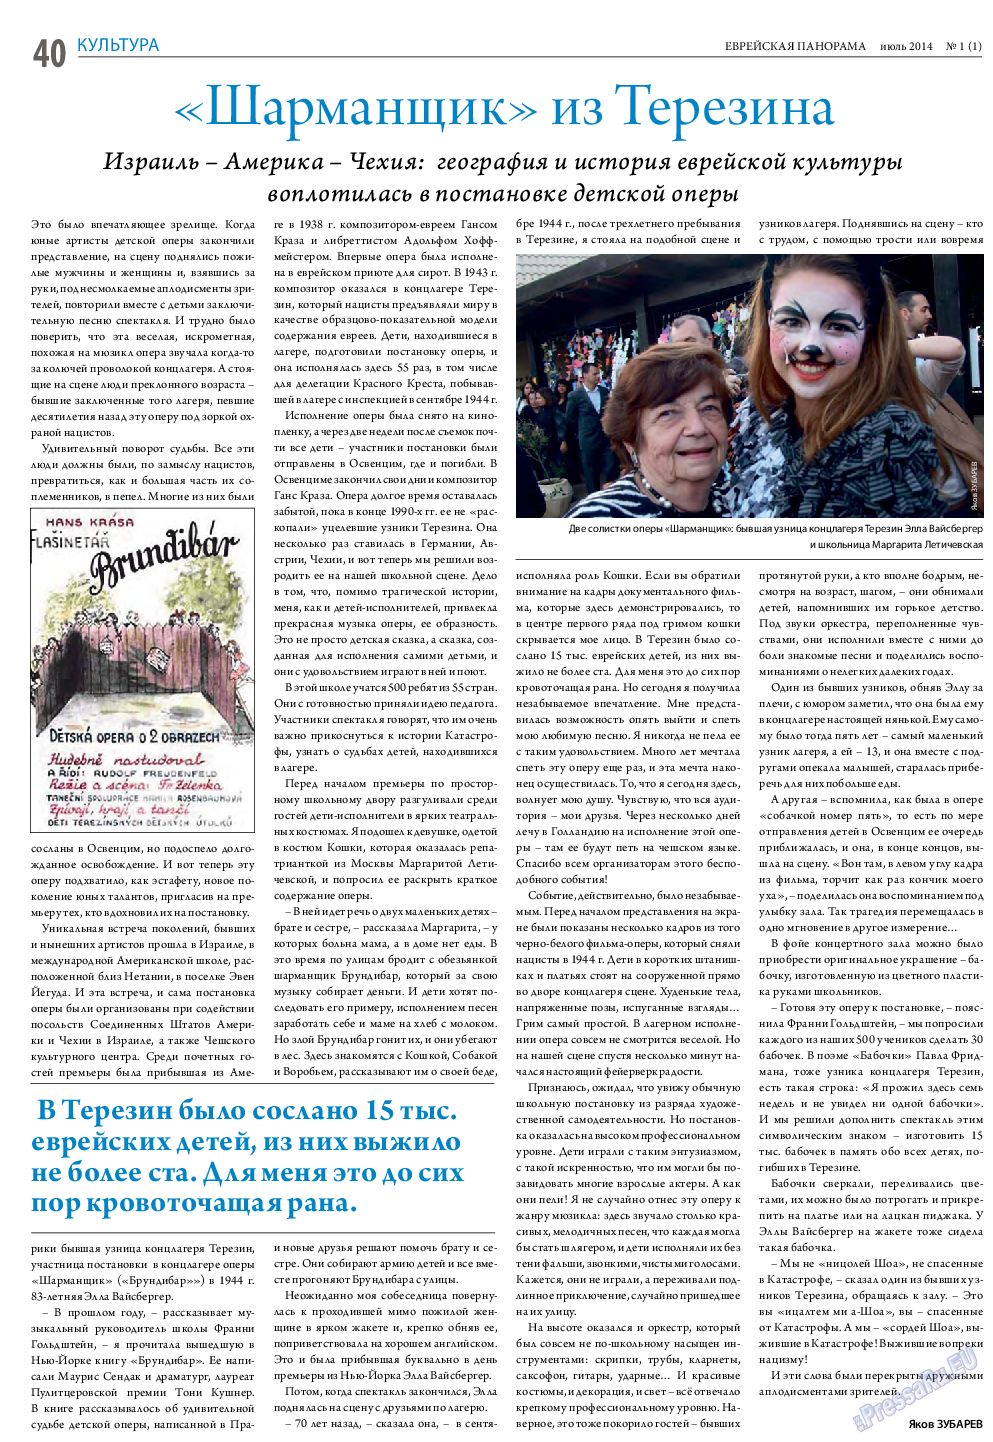 Еврейская панорама, газета. 2014 №1 стр.40